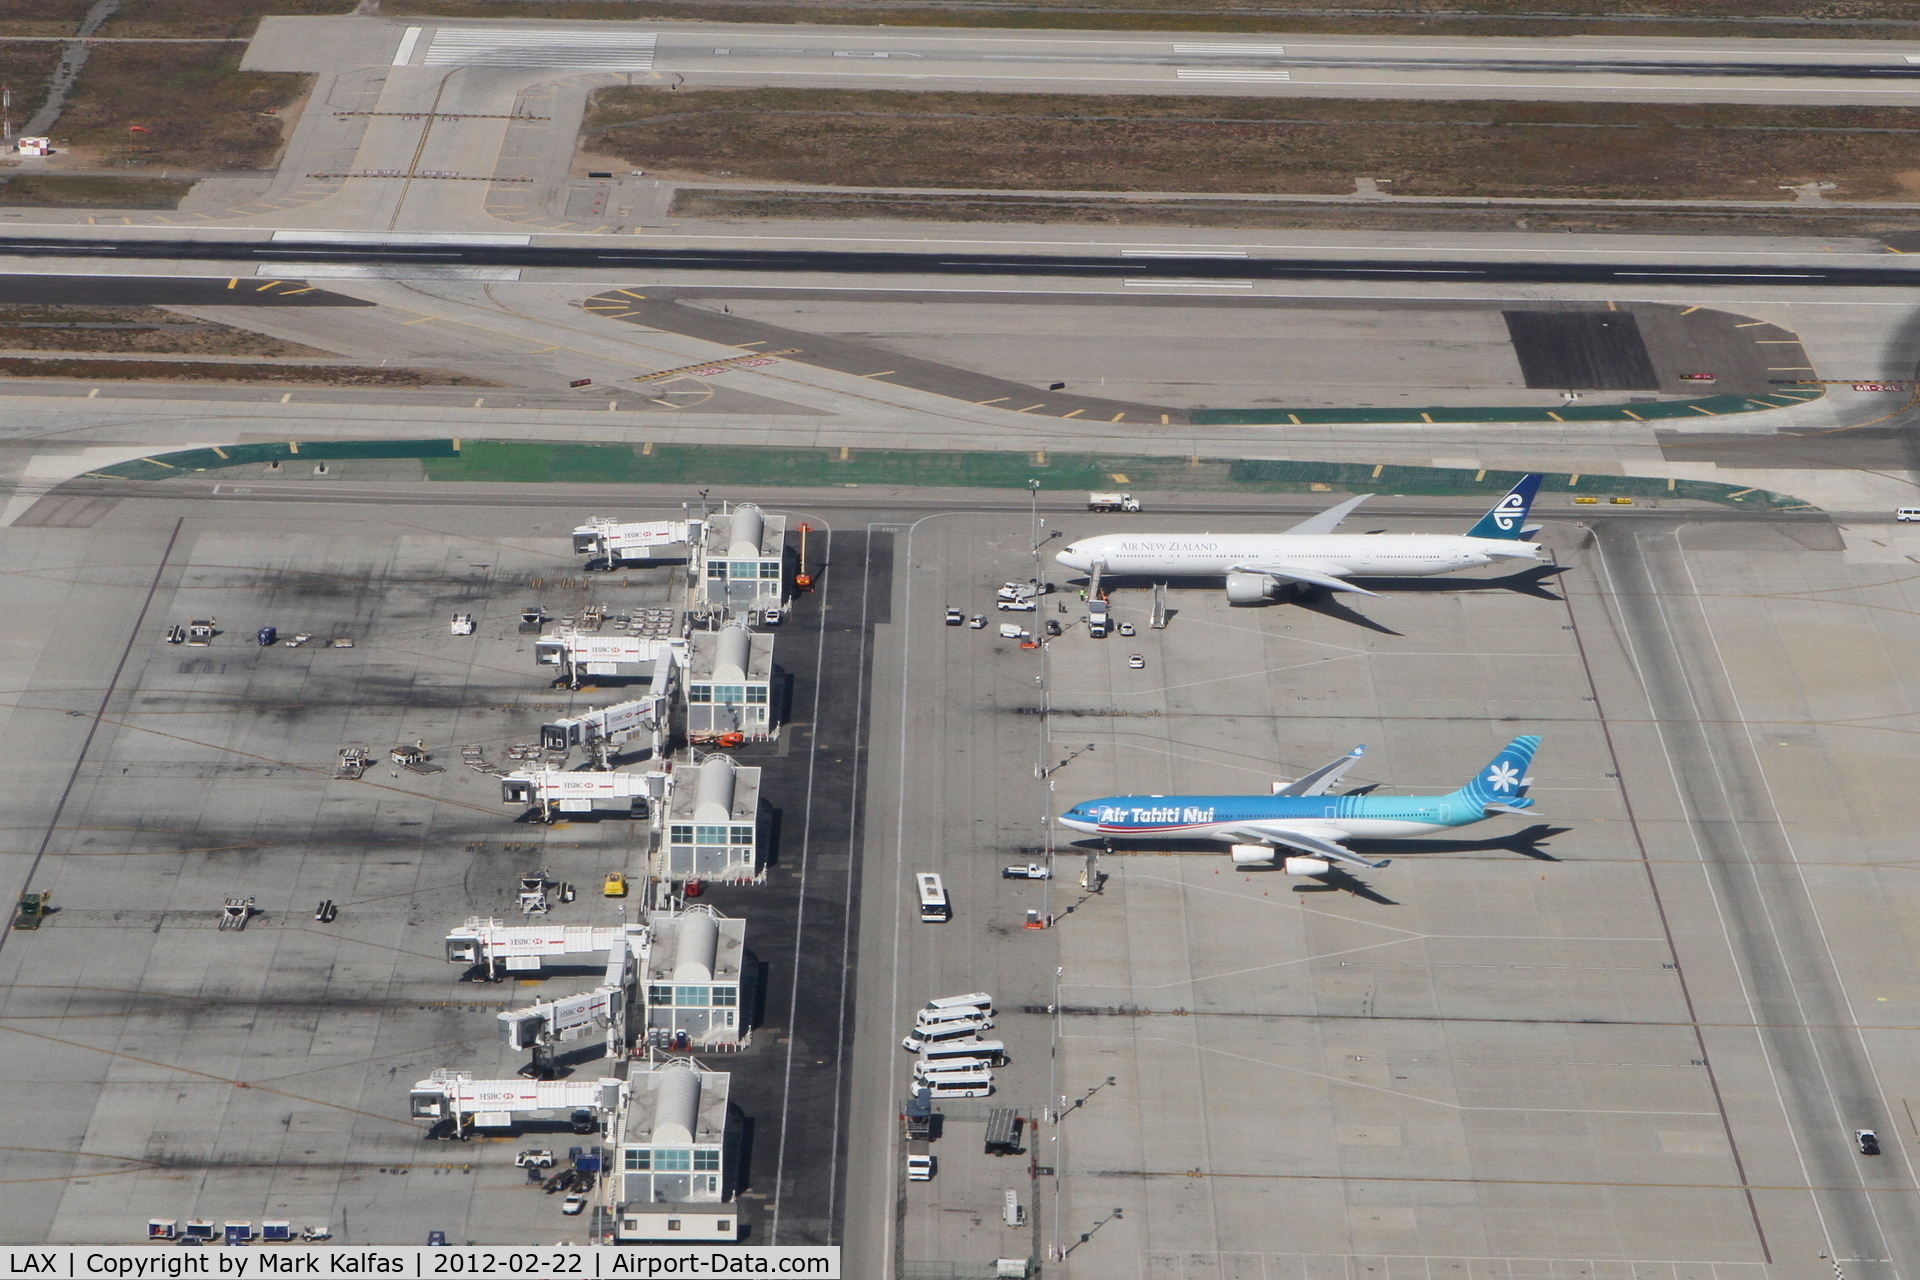 Los Angeles International Airport (LAX) - Air Tahiti Nui A343 and Air New Zealand B773 at West/Remote Gates.